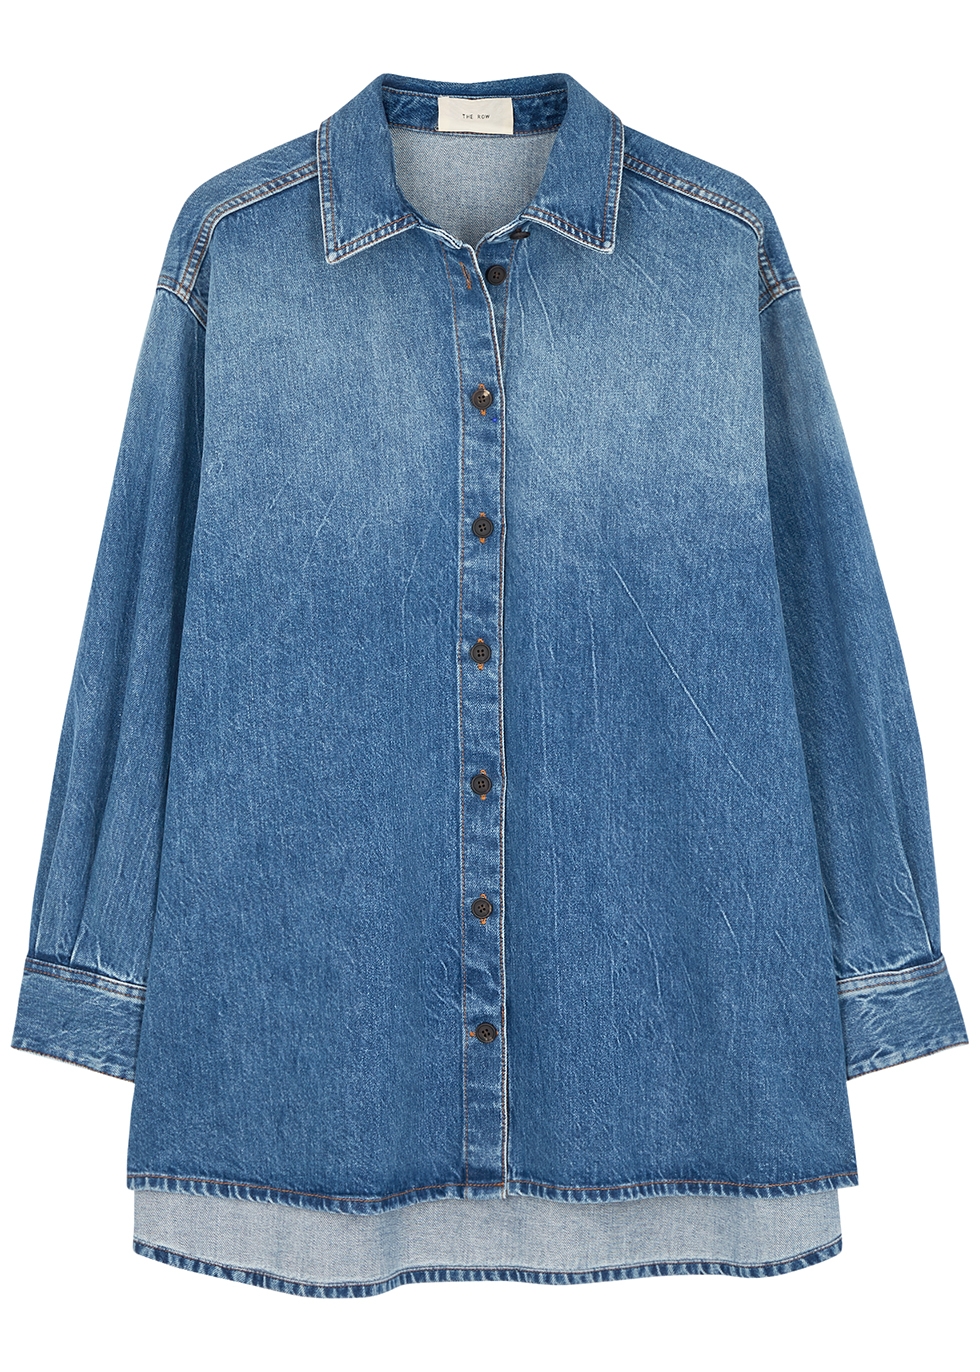 THE ROW Frannie blue denim shirt - Harvey Nichols